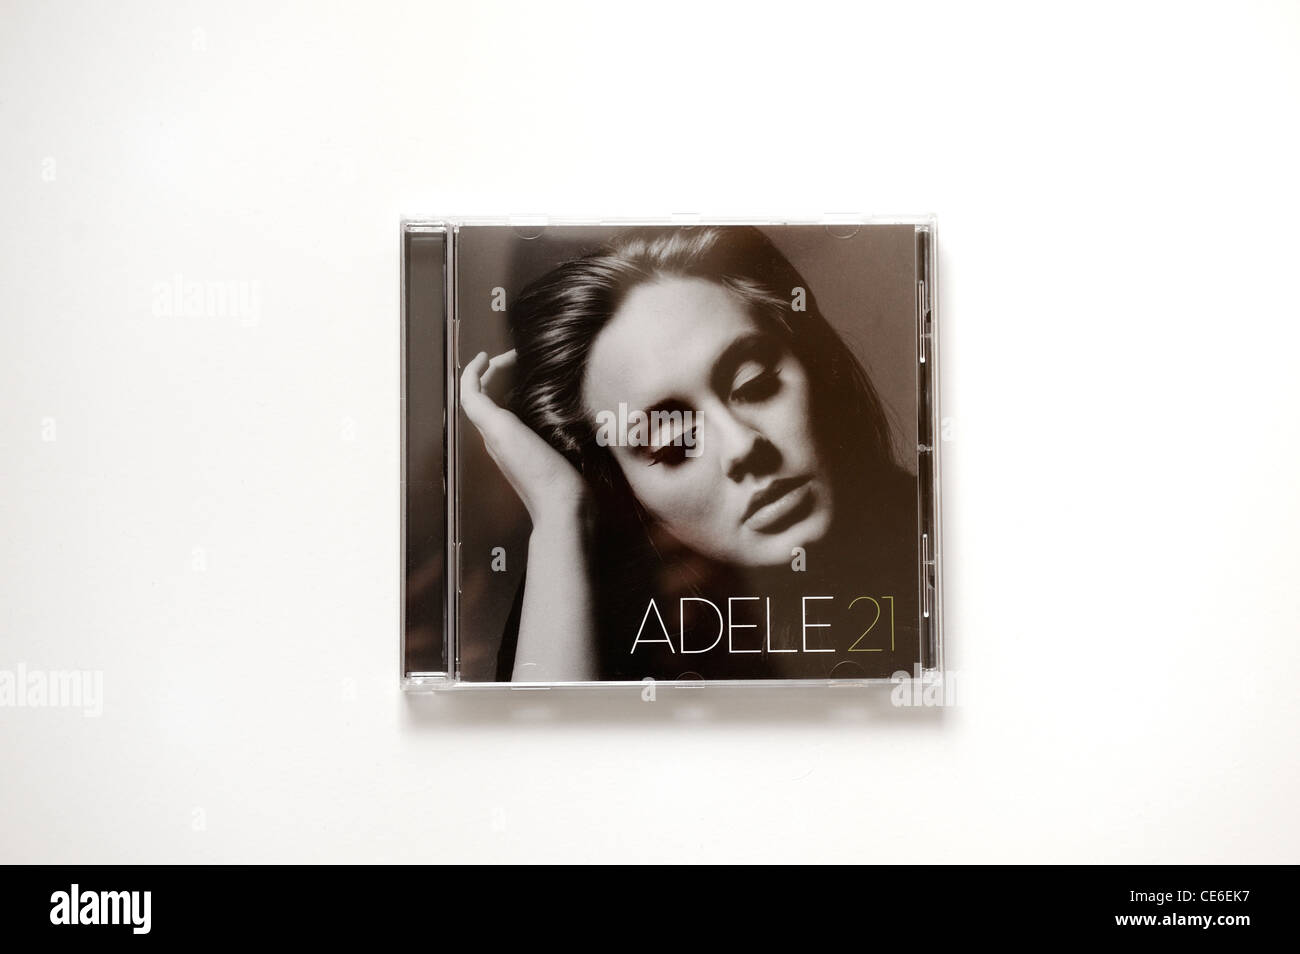 Adele adkins best selling cd album 21 Foto stock - Alamy